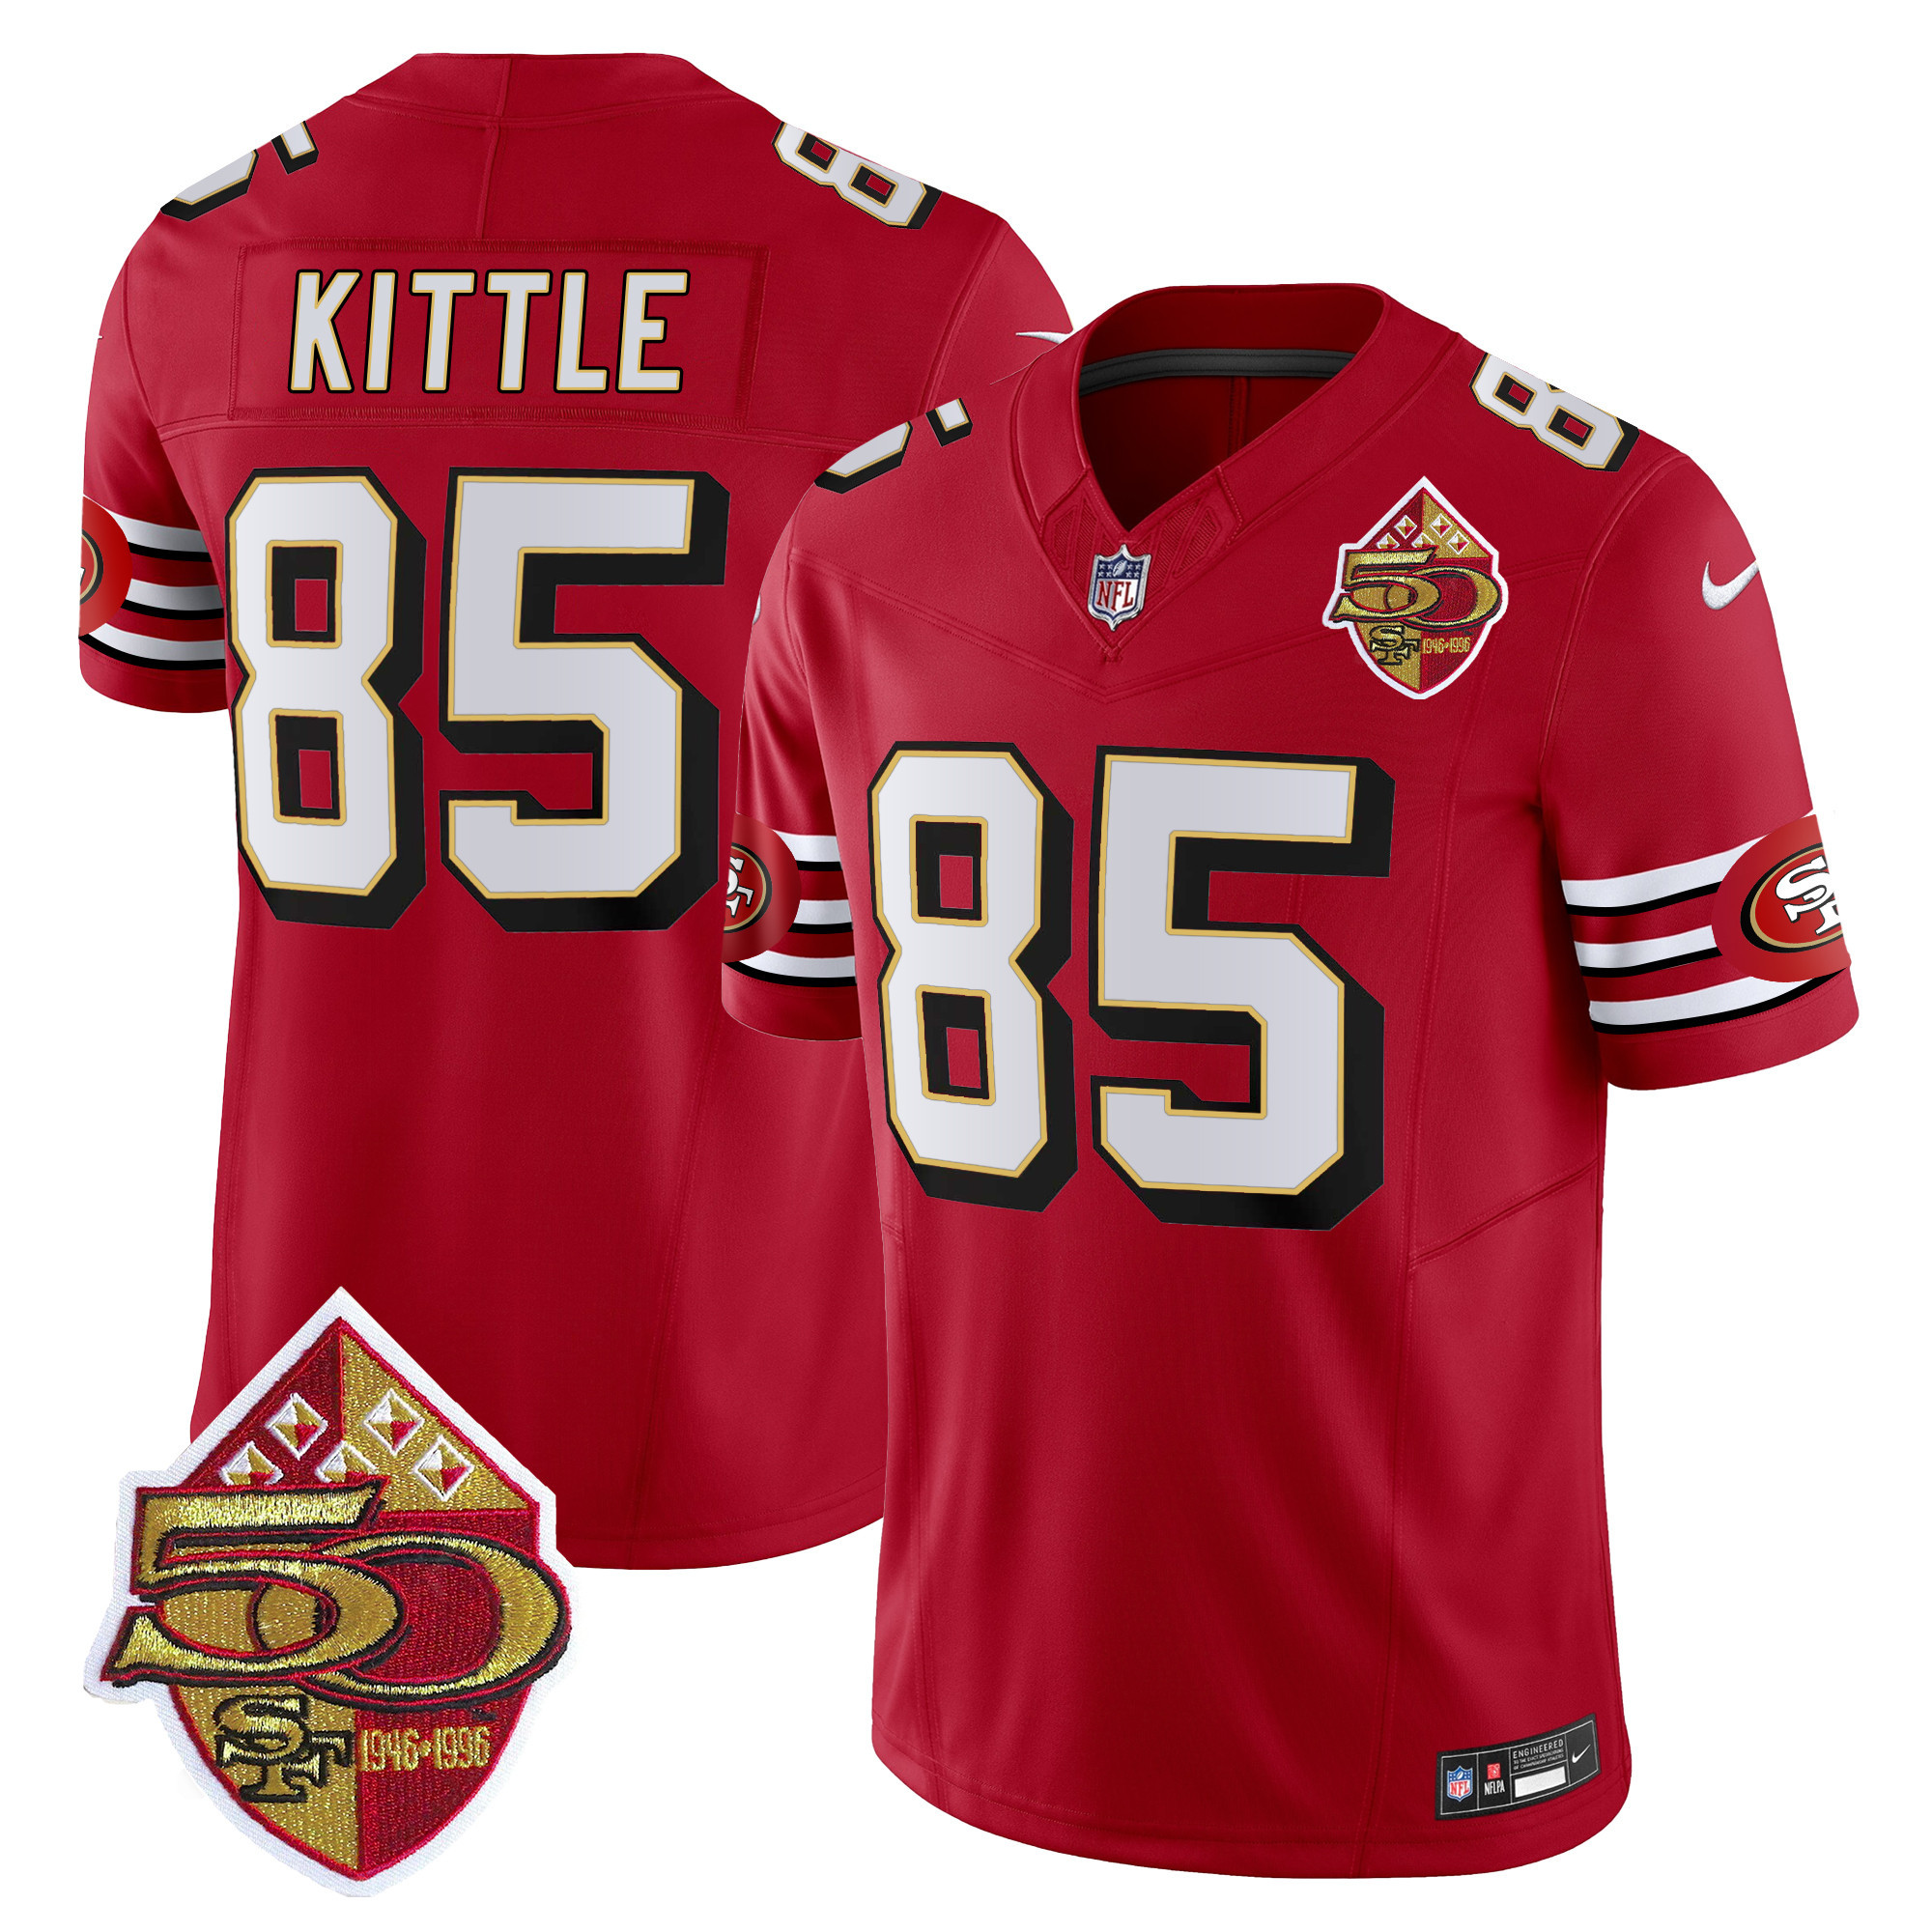 kittle jersey 49ers